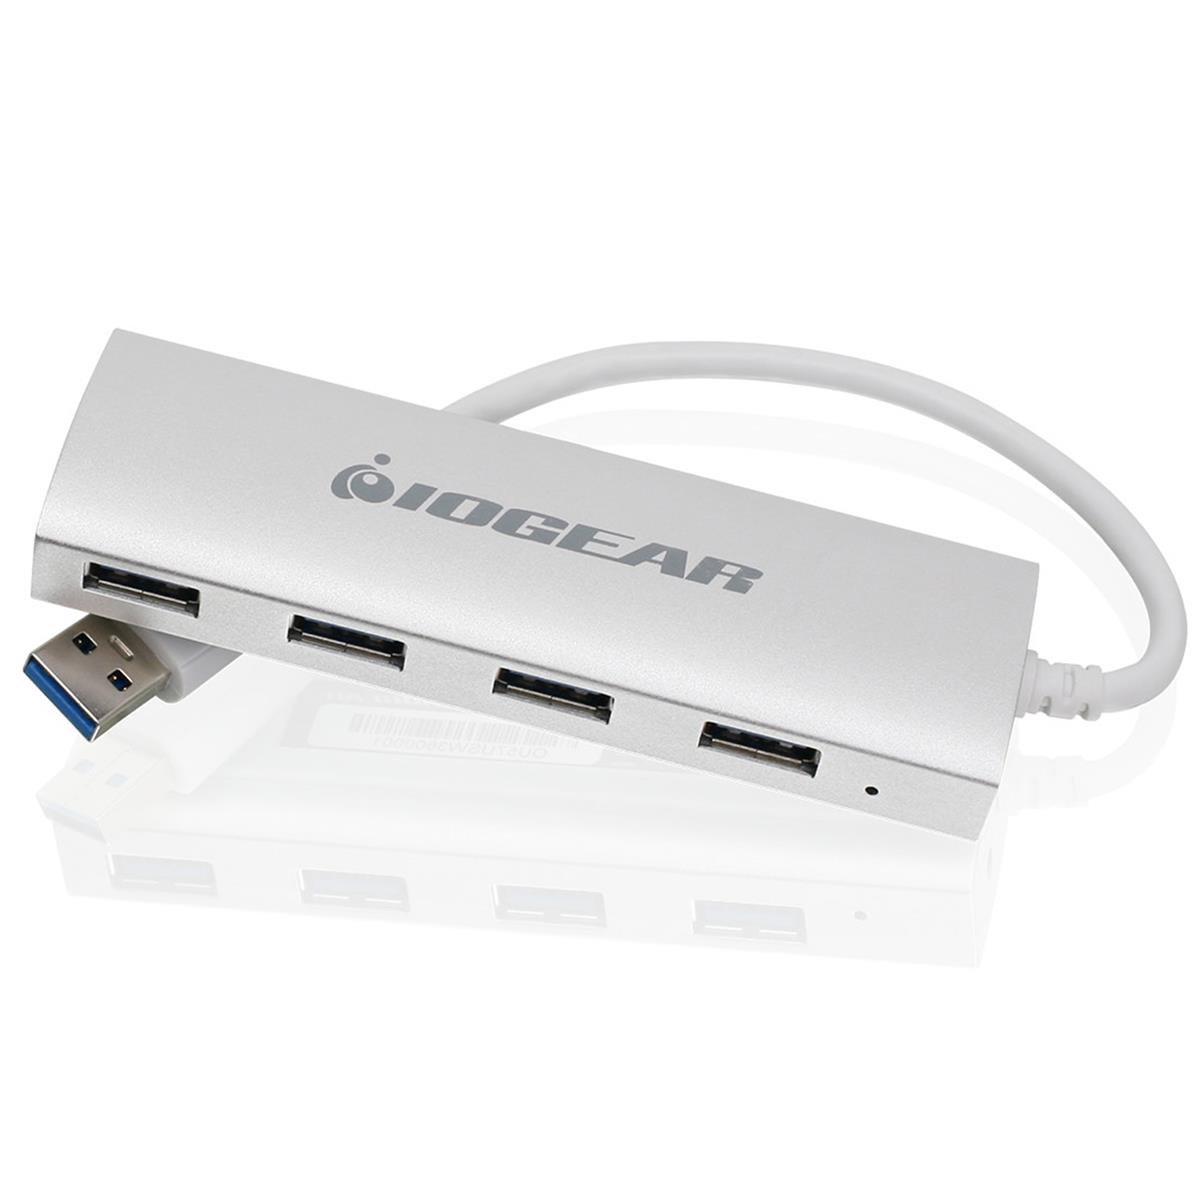 Image of IOGEAR GUH304 Aluminum USB 3.0 4-Port Hub